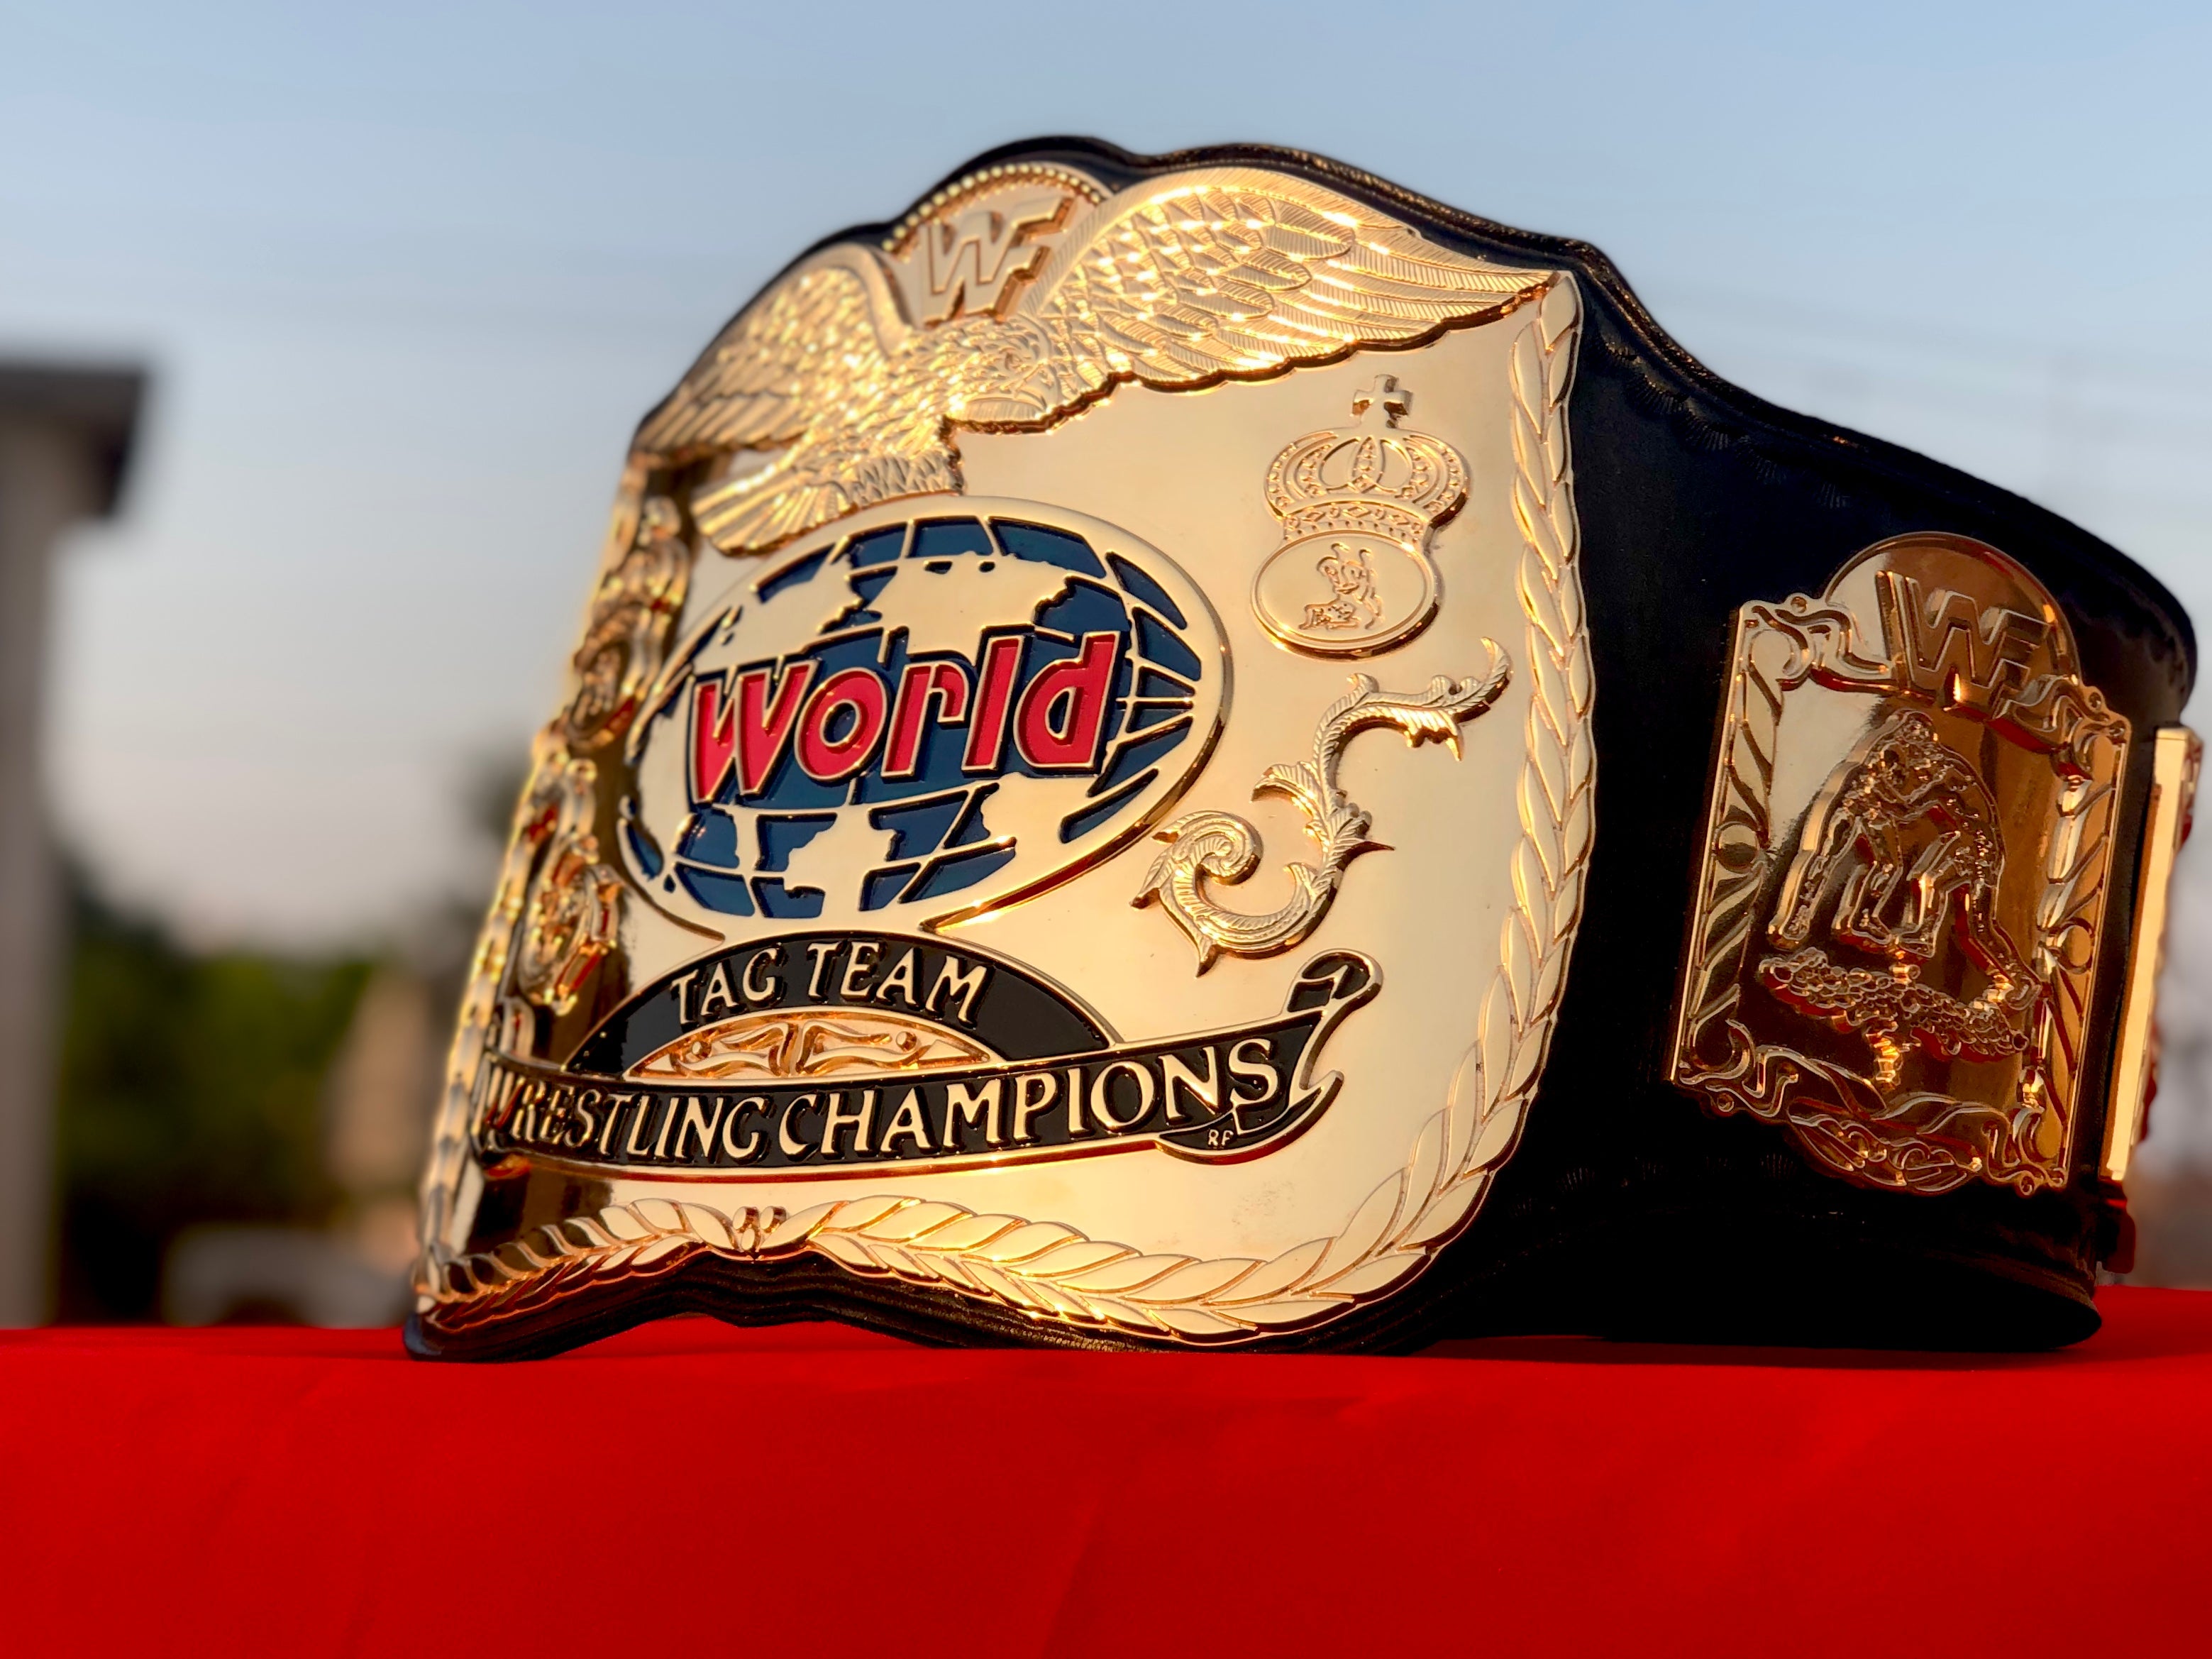 WWF Premium World Tag Team CNC Championship Belt